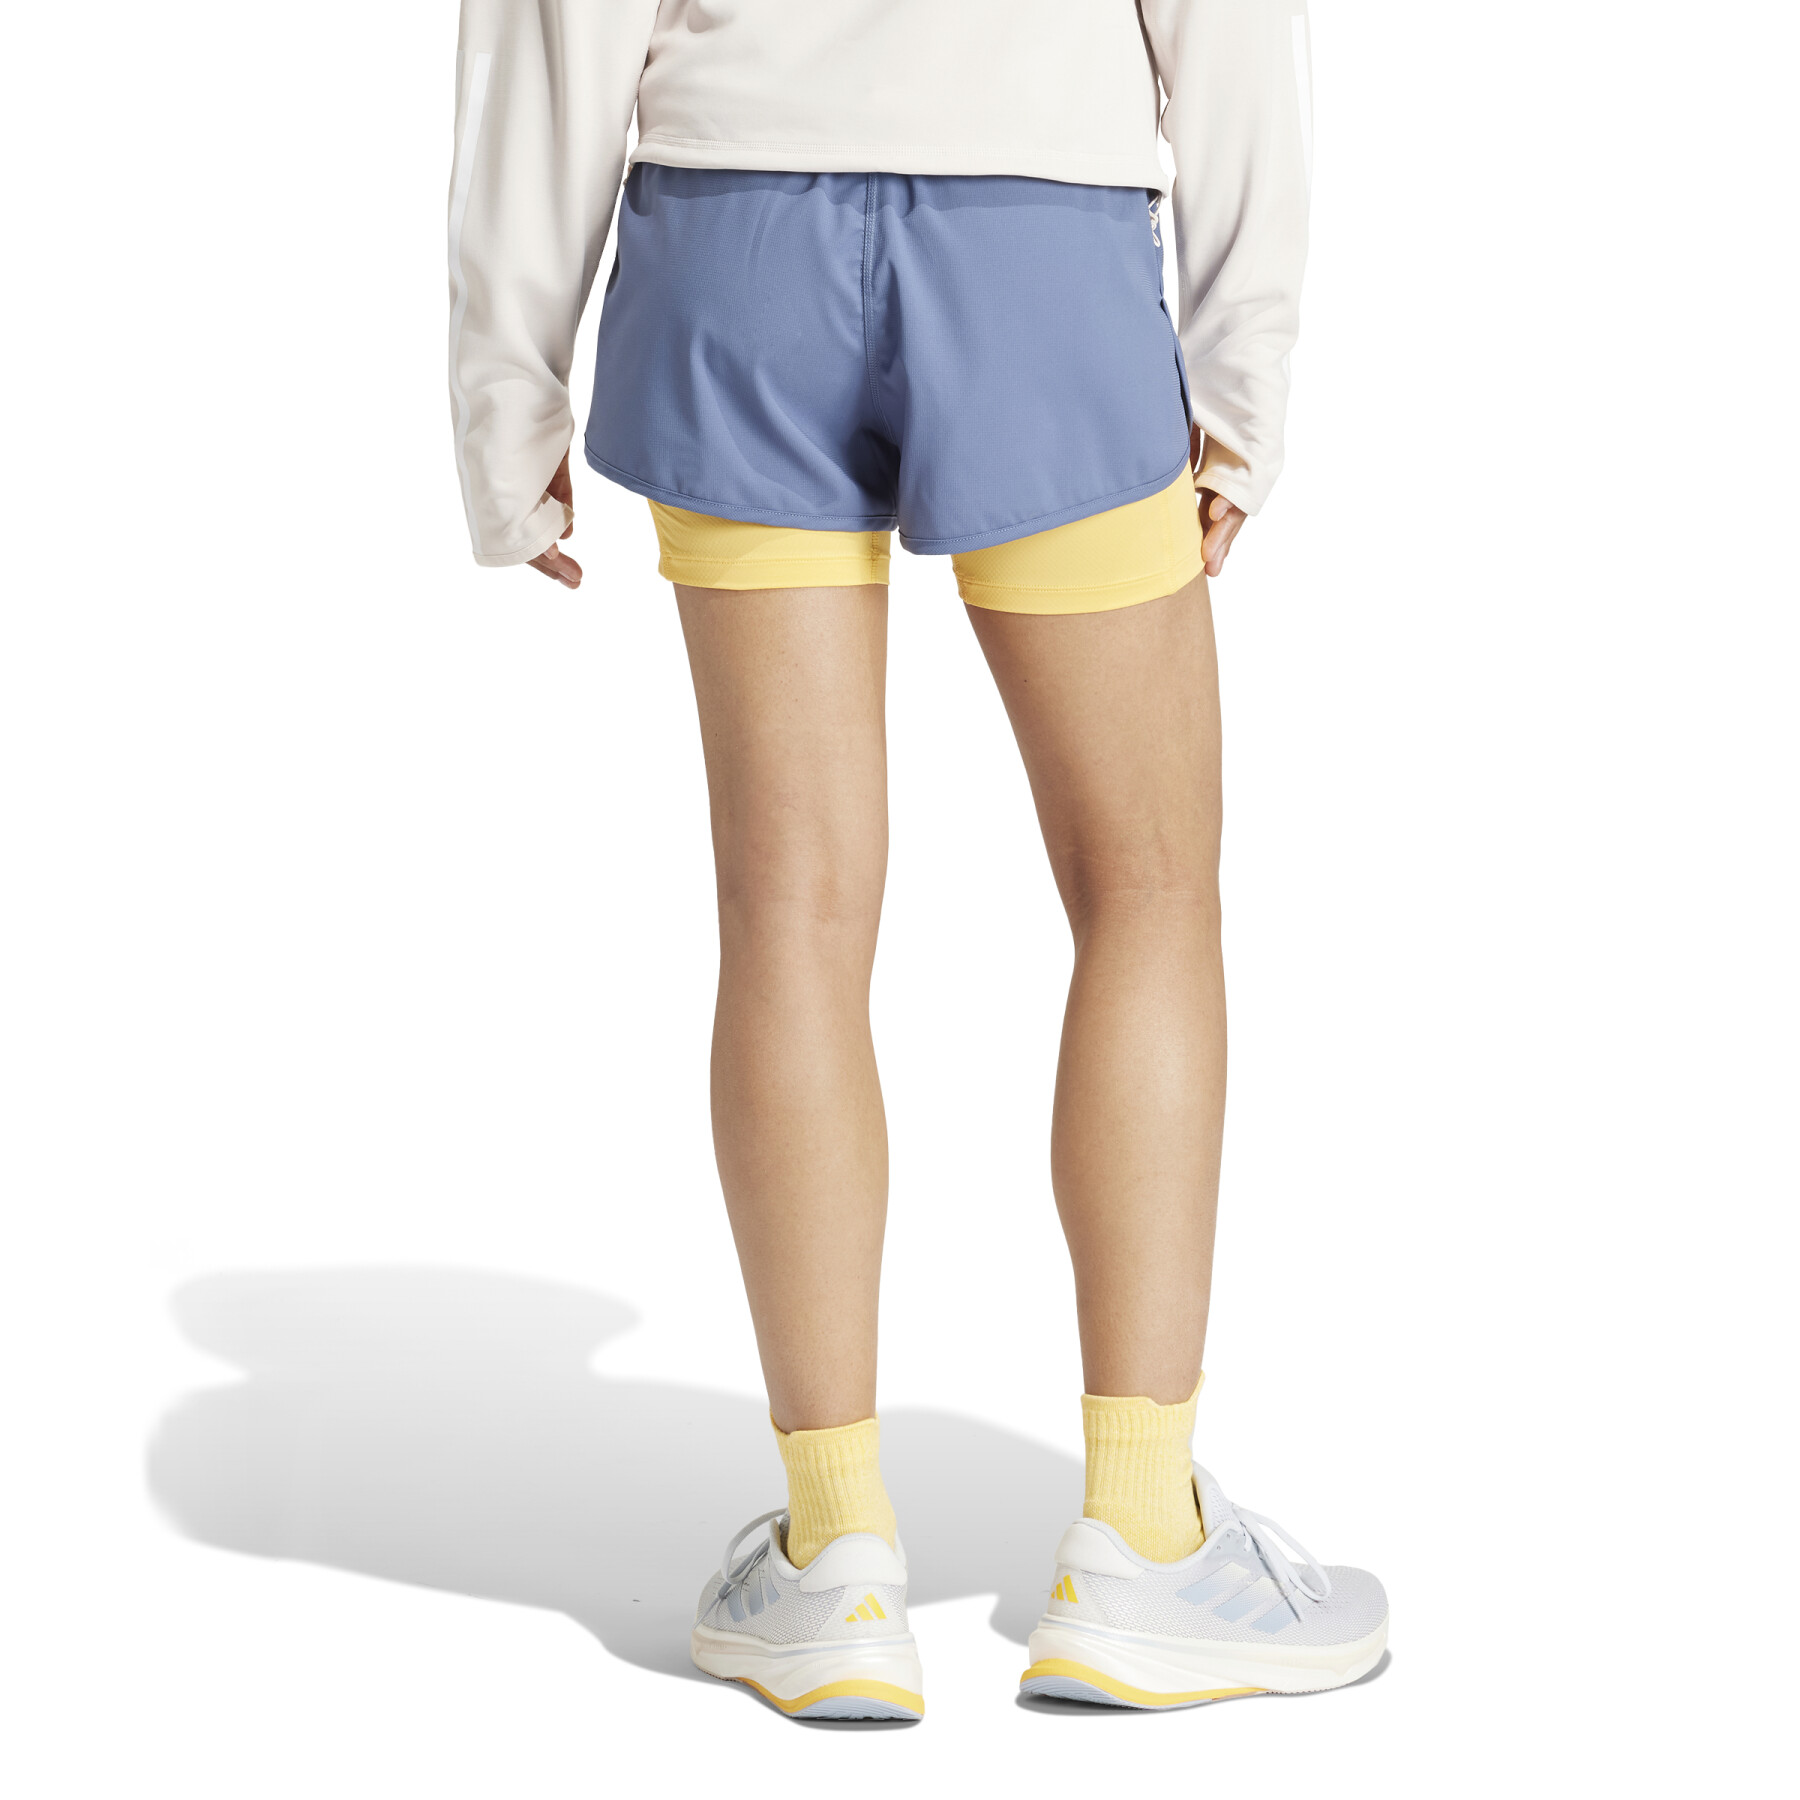 Women's 2-in-1 shorts adidas Own the Run 3 Stripes